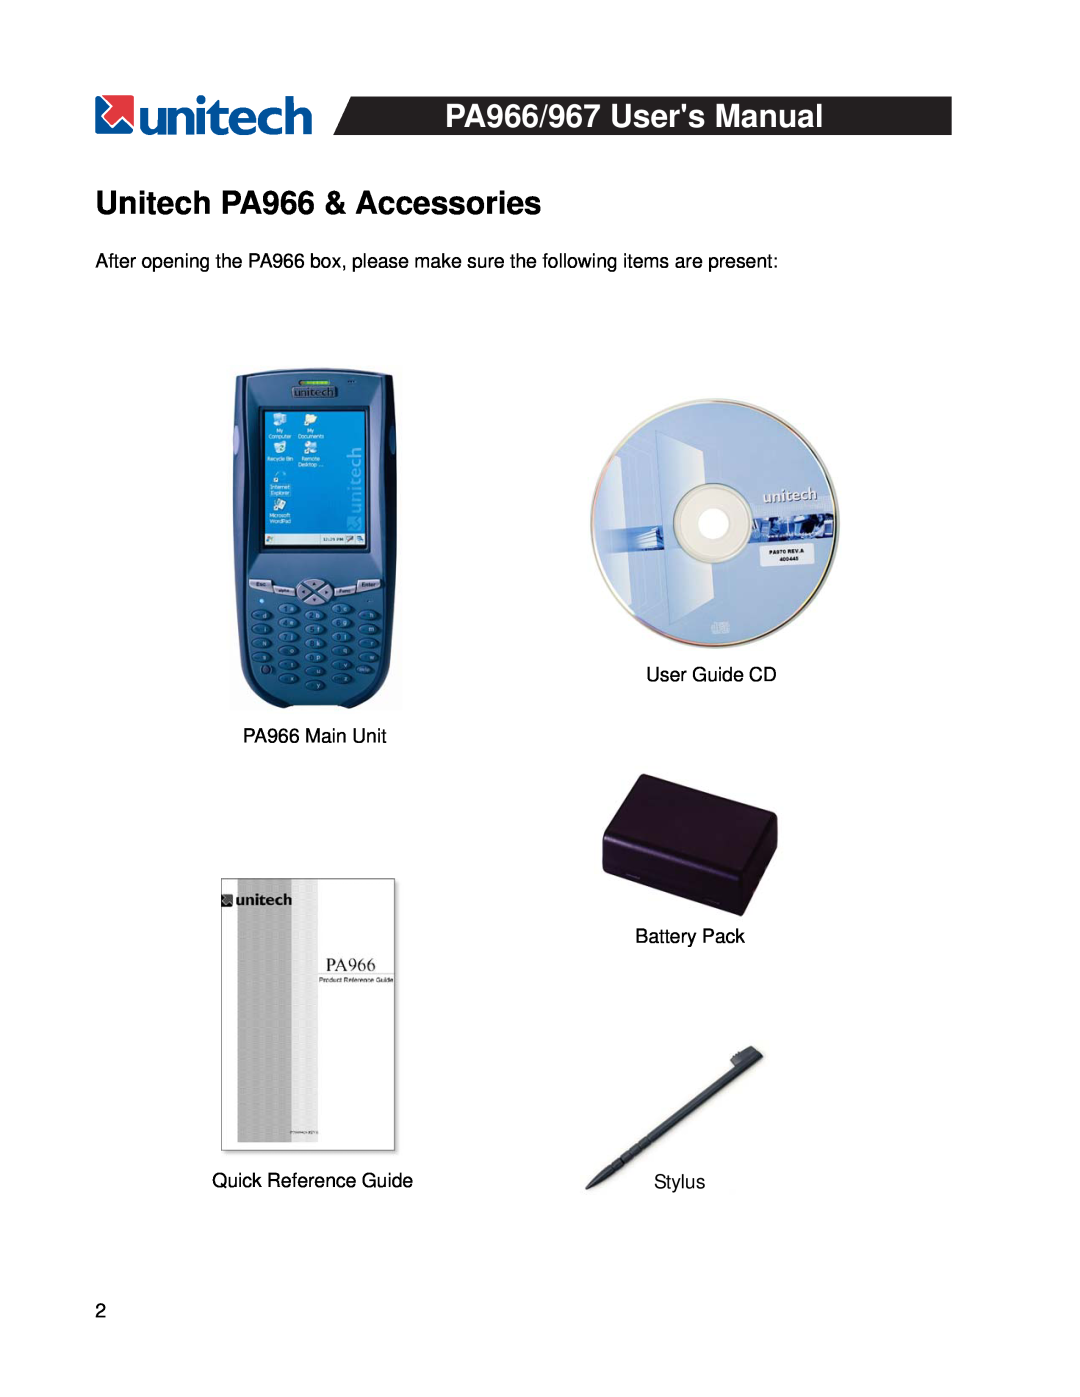 Unitech PA967 Unitech PA966 & Accessories, User Guide CD PA966 Main Unit Battery Pack, Quick Reference Guide, Stylus 